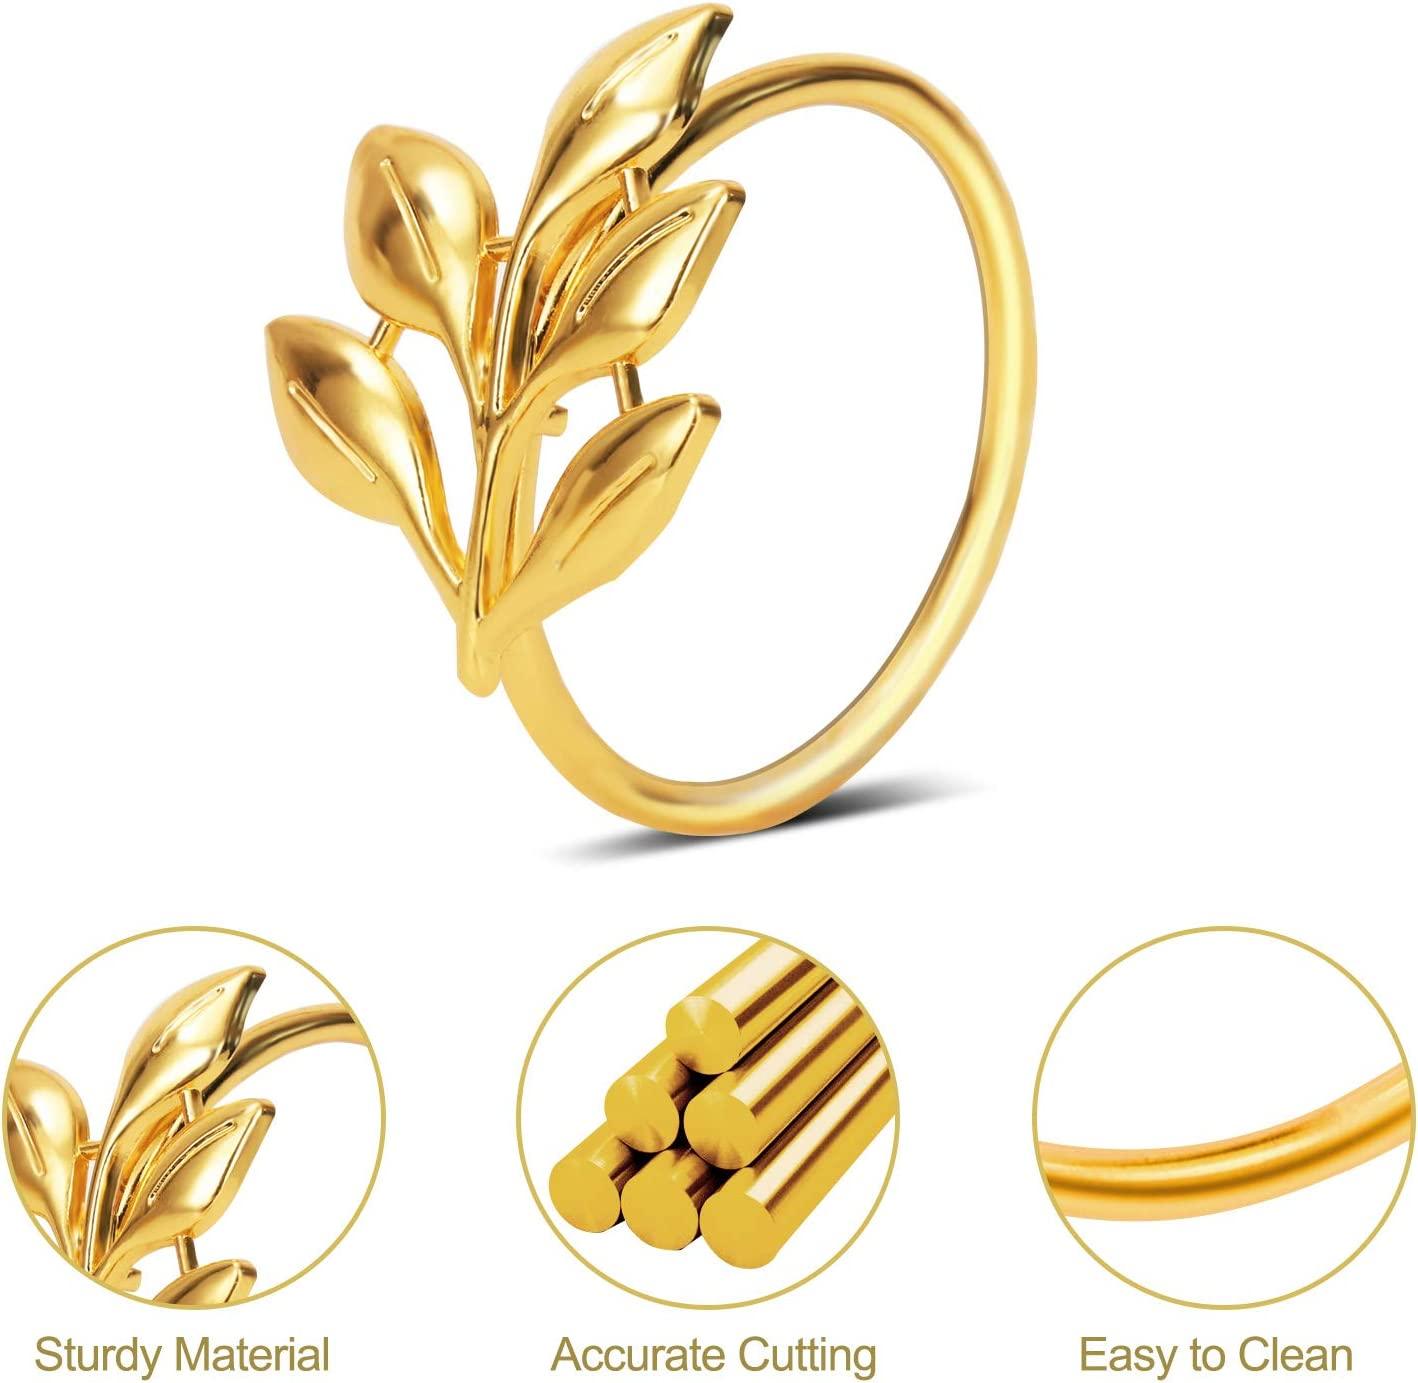 20Pcs Gold Leaf Napkin Rings - Elegant Gold Napkin Ring for Wedding Ta – If  you say i do